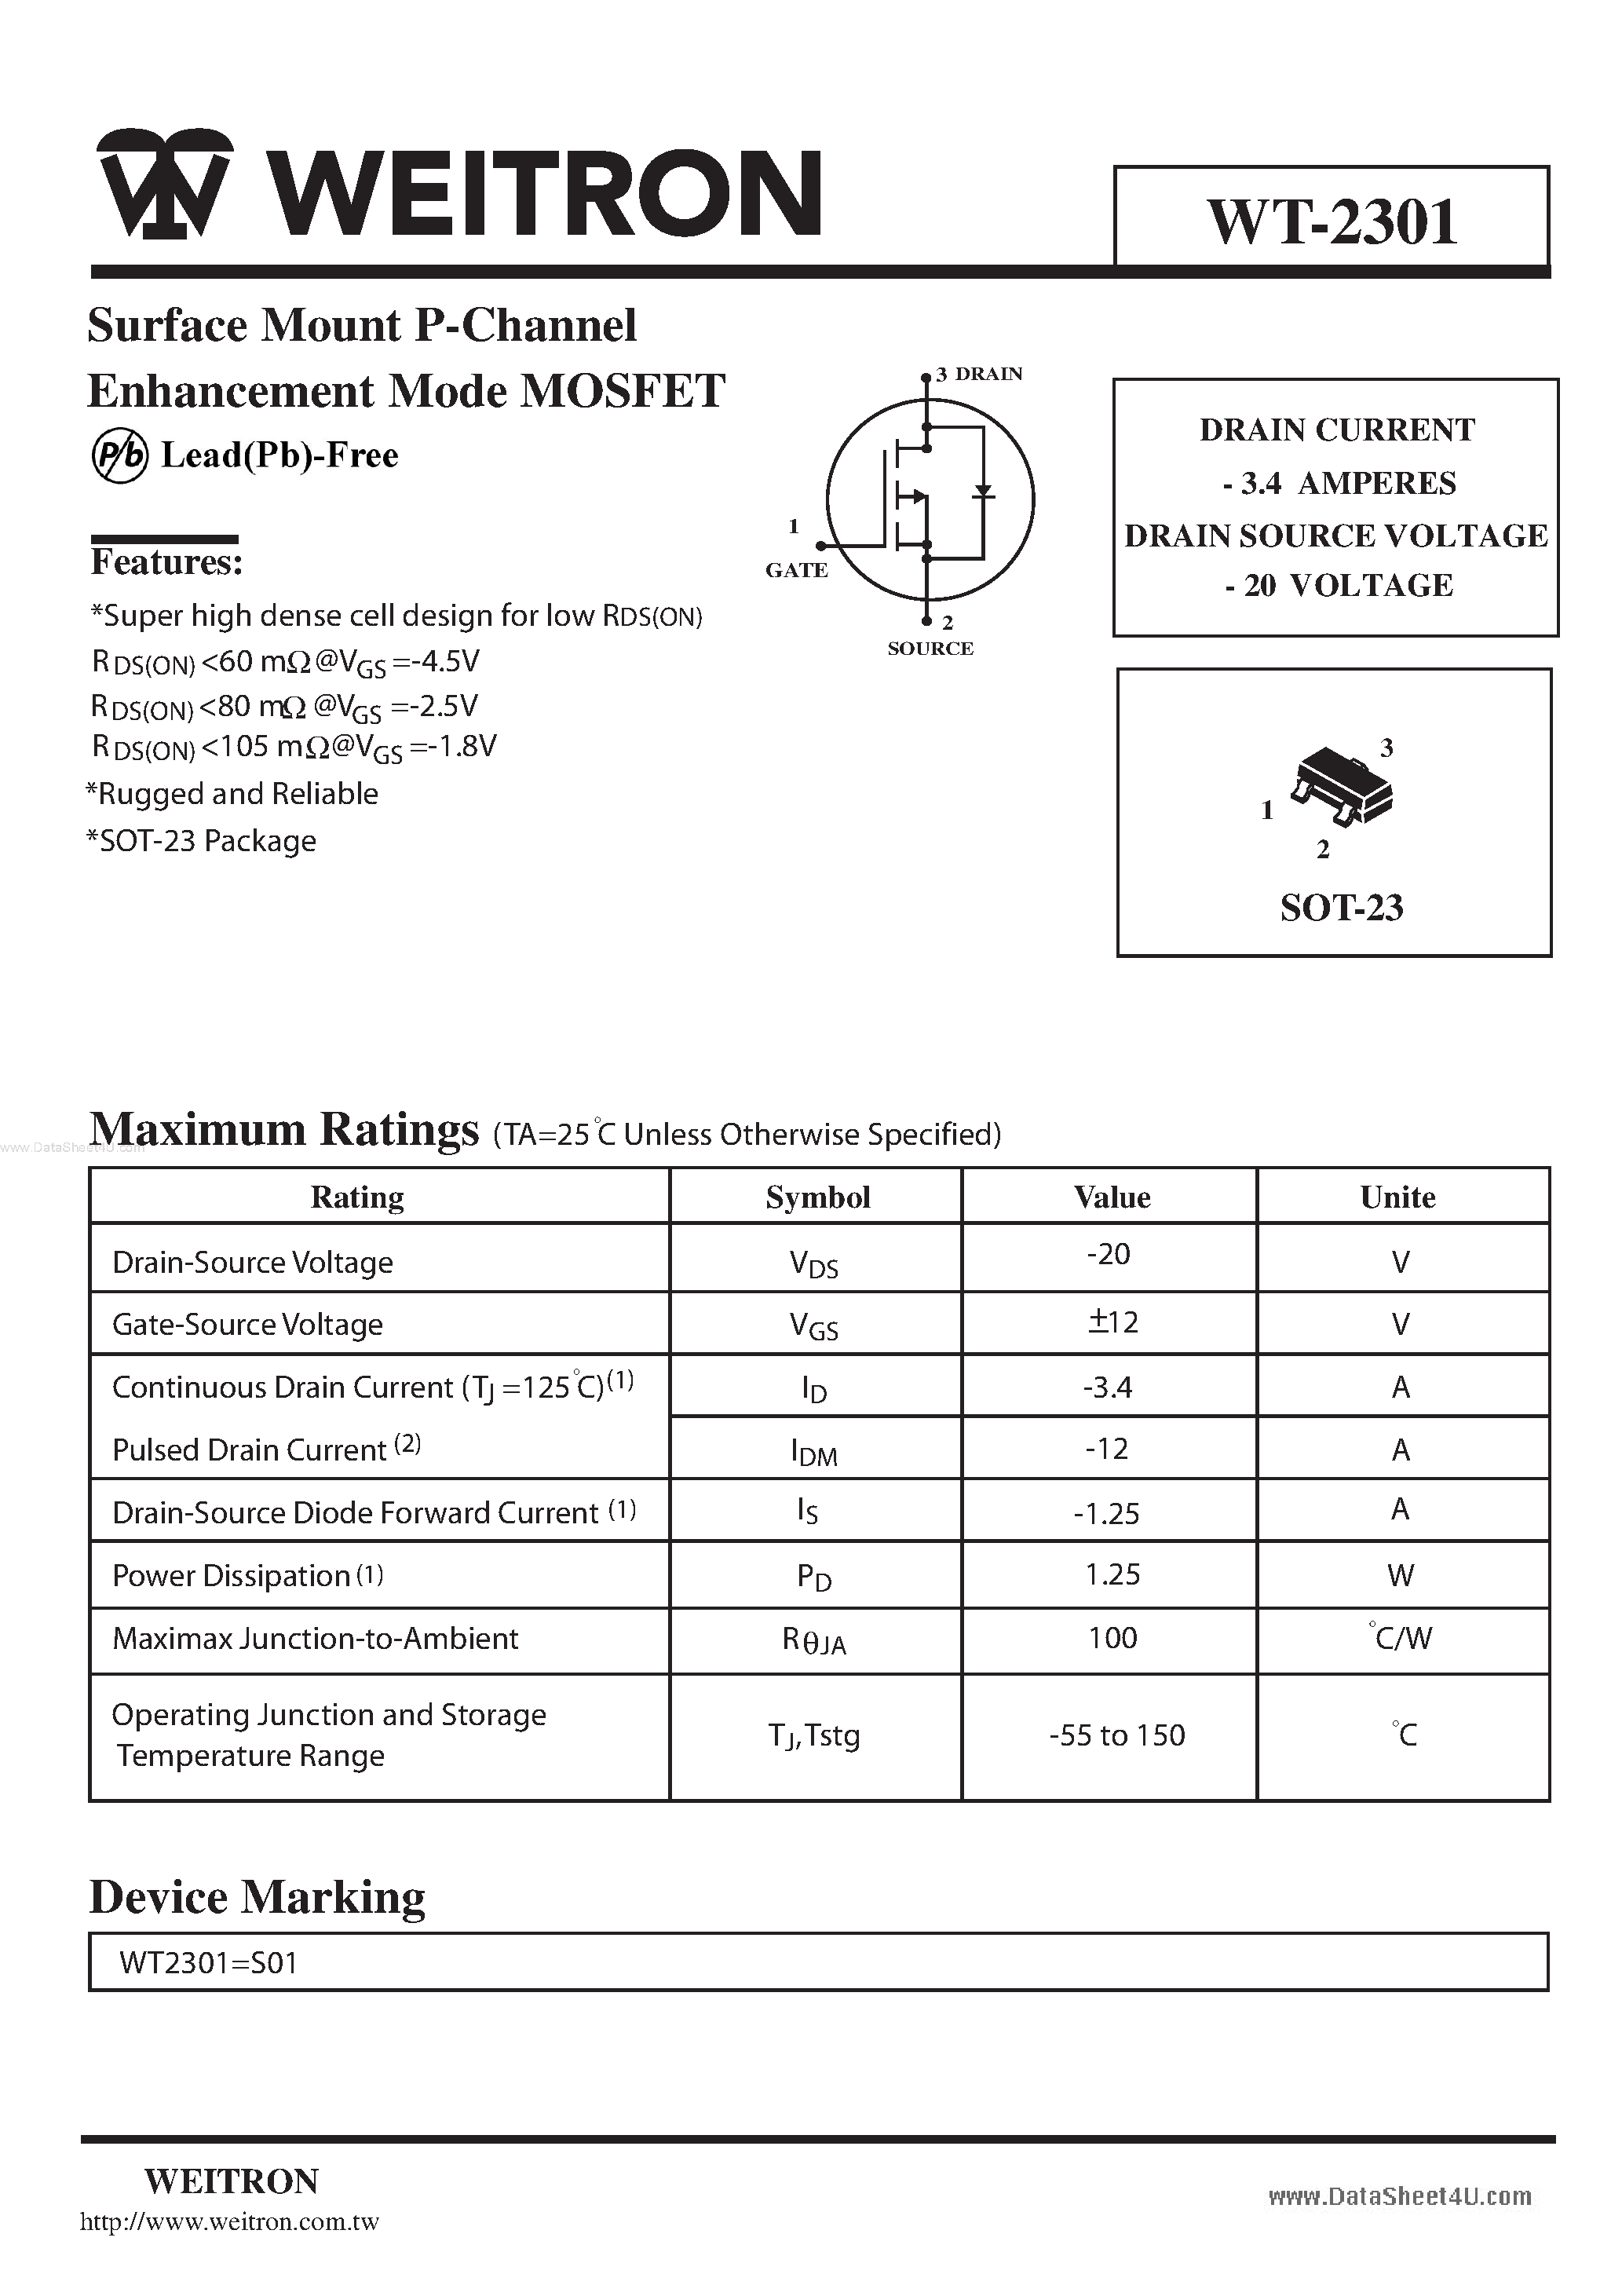 Datasheet WT-2301 - Surface Mount P-Channel Enhancement Mode MOSFET page 1